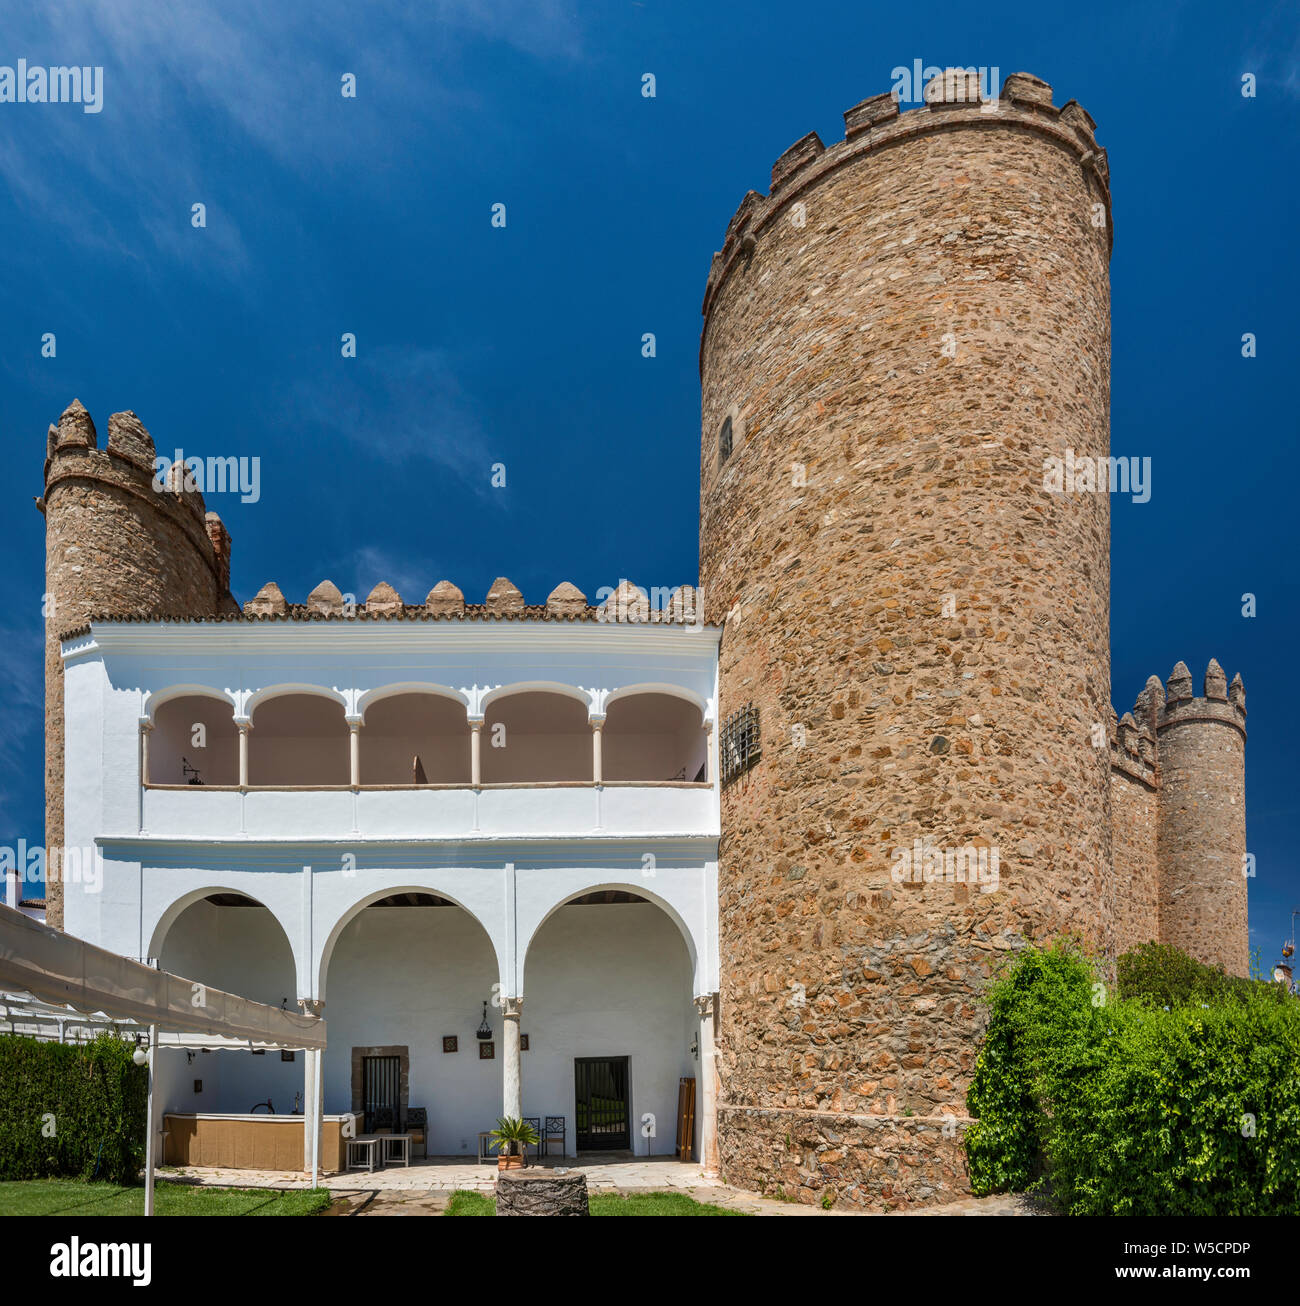 Parador Hernan Cortes, 15th century palace in Zafra, Badajoz province, Extremadura, Spain Stock Photo